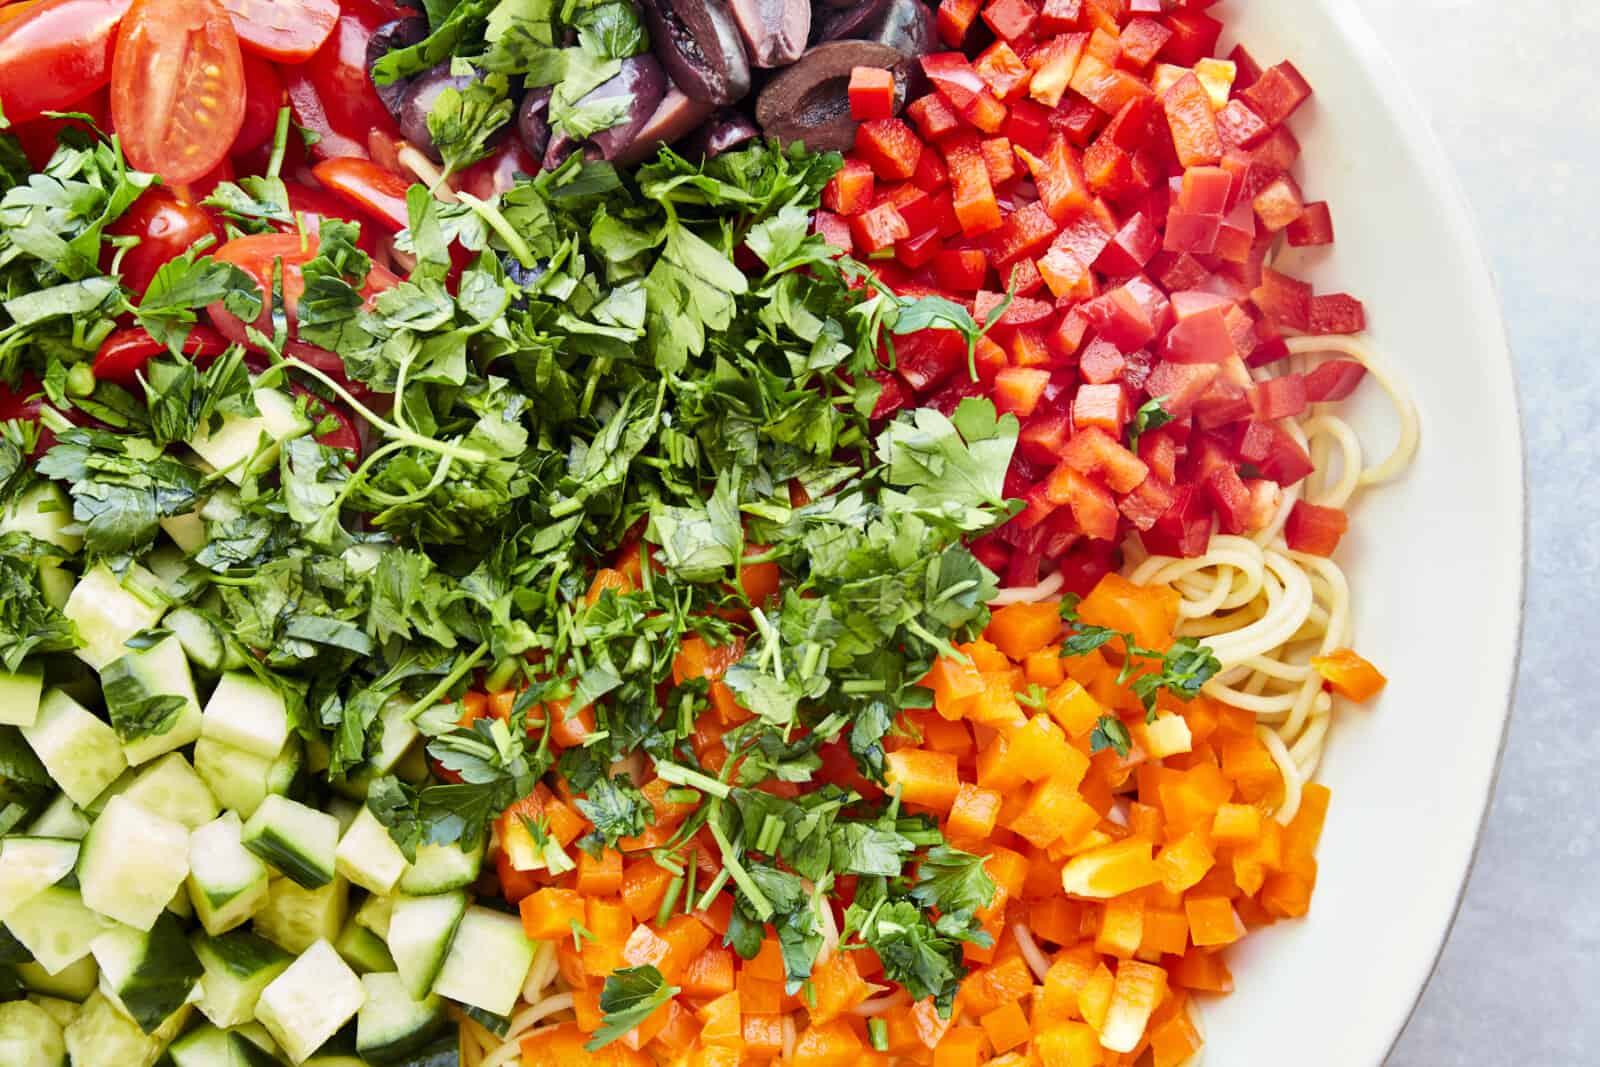 Untossed spaghetti pasta salad with veggies. 